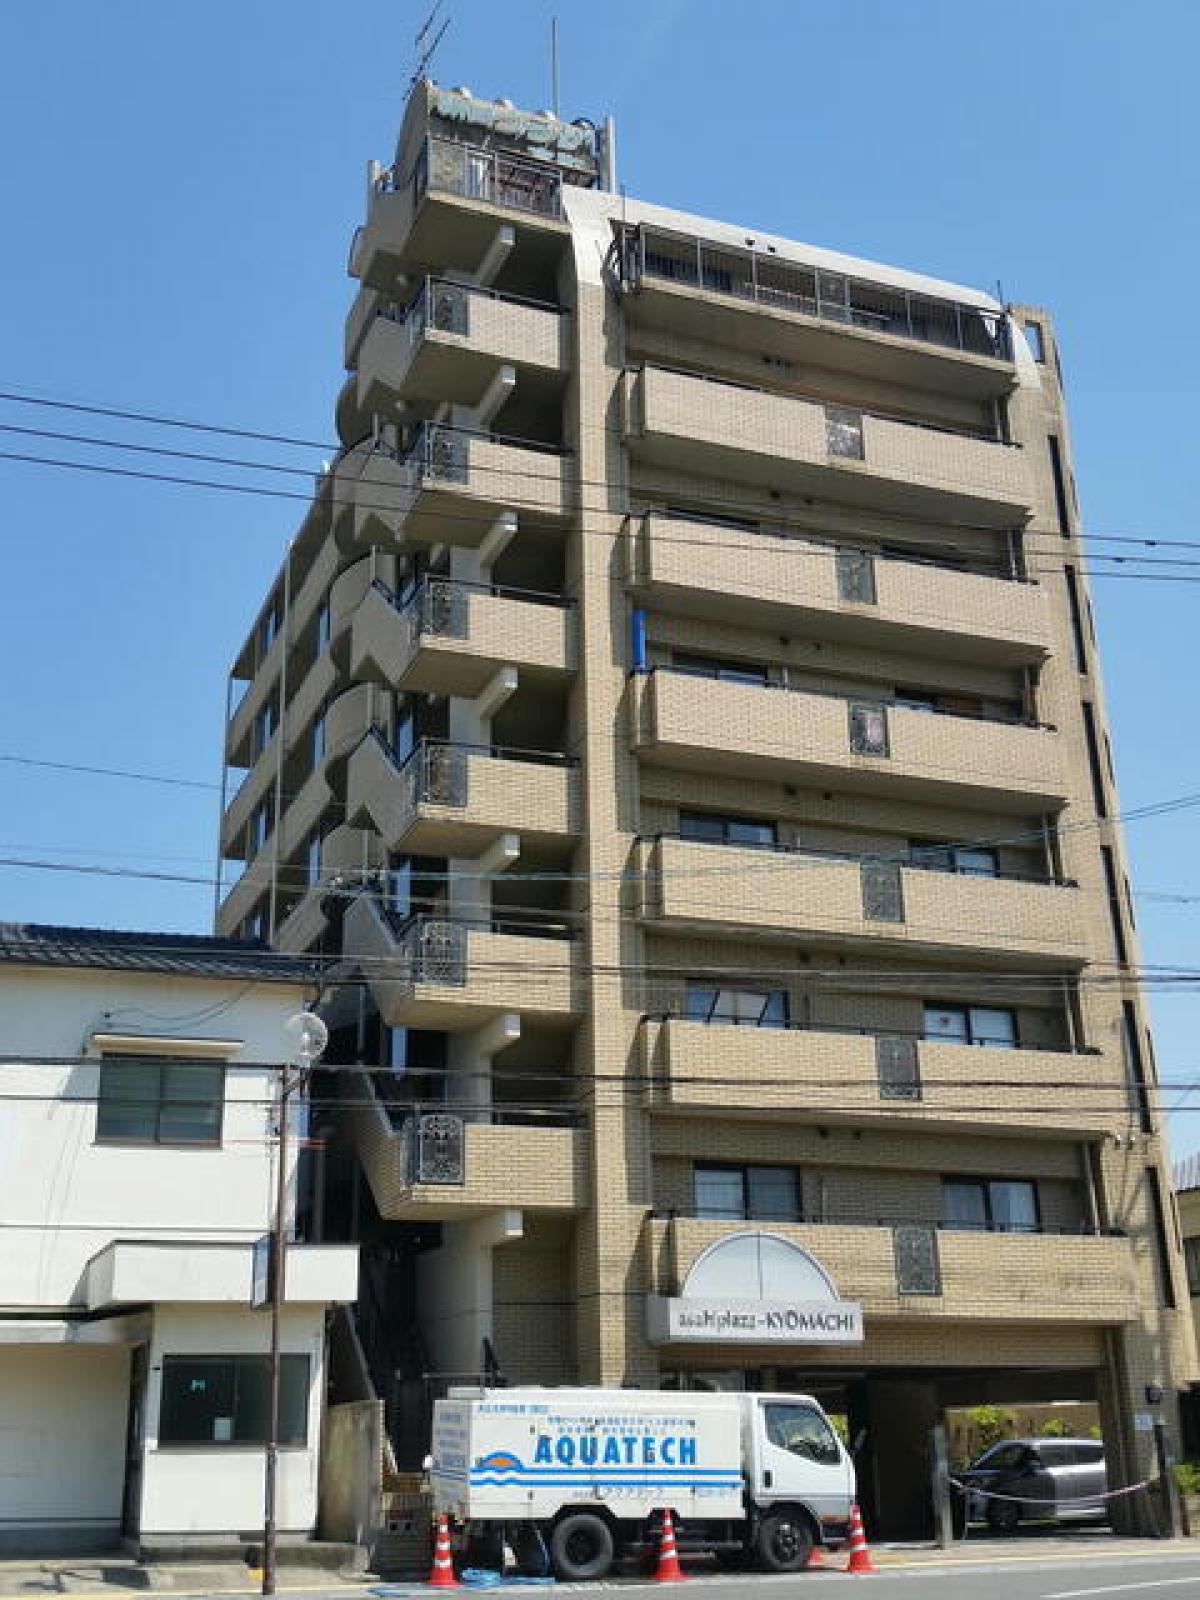 Picture of Apartment For Sale in Kumamoto Shi Chuo Ku, Kumamoto, Japan